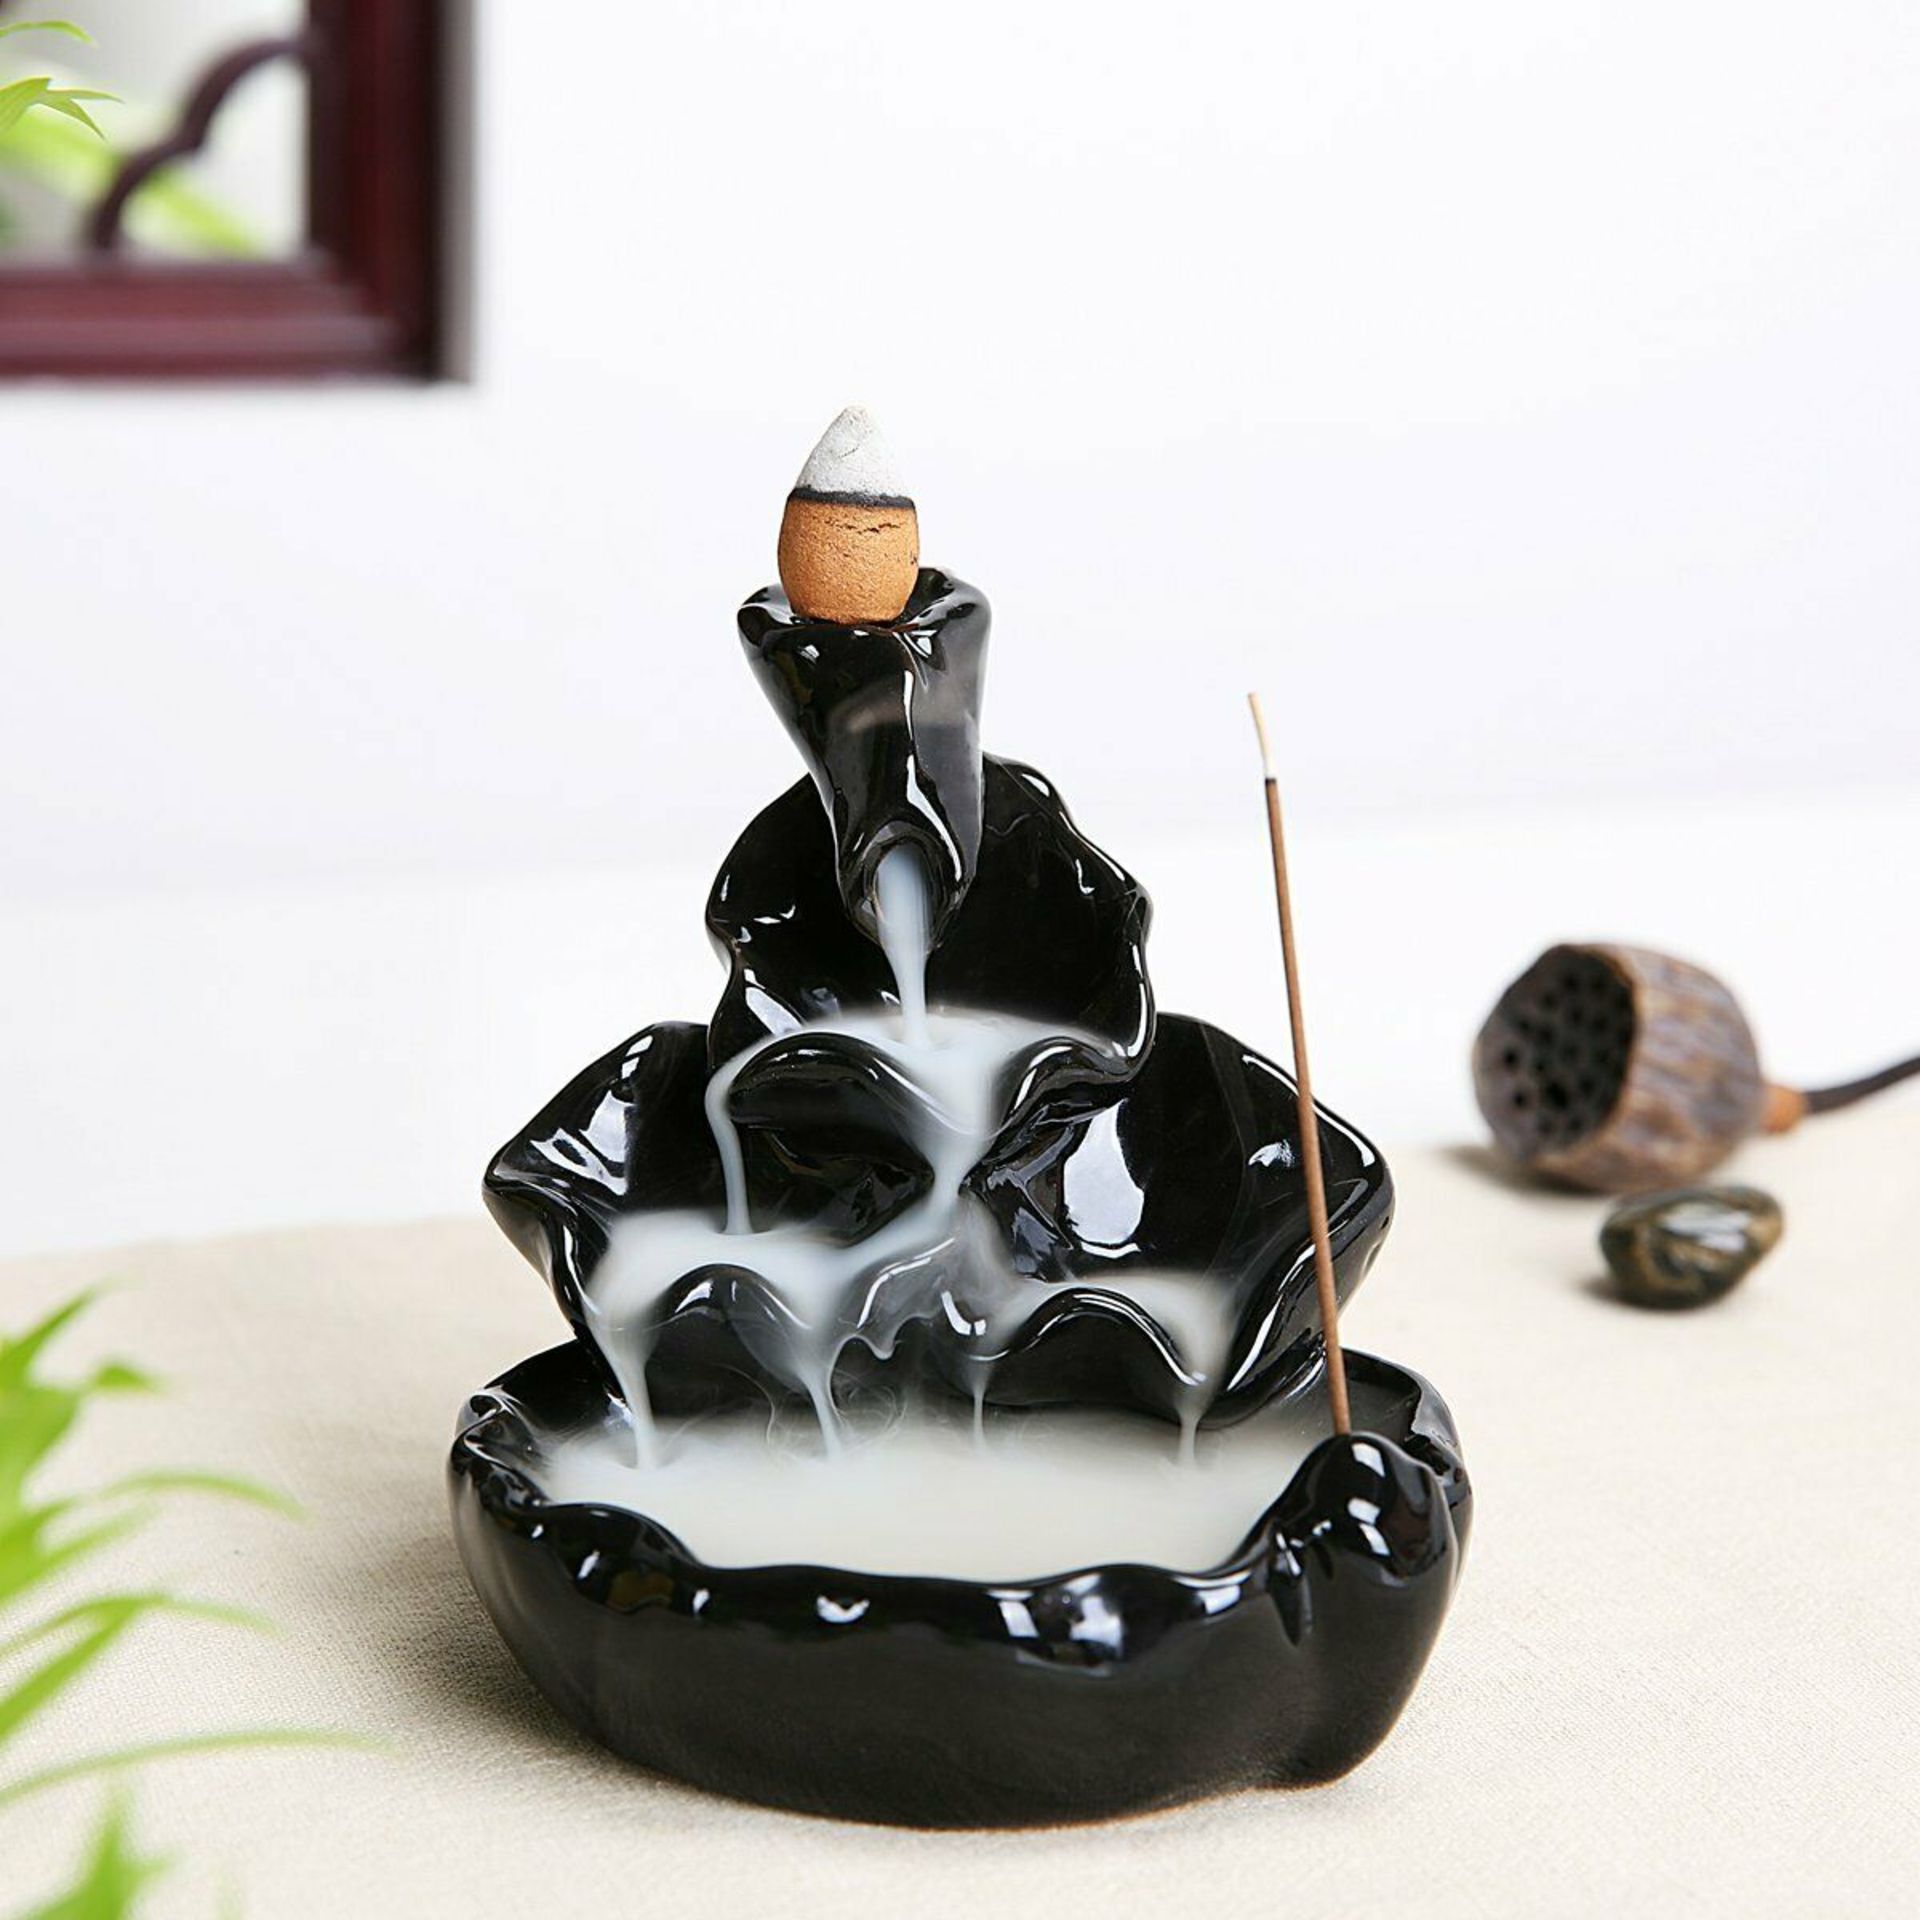 10 x Pixnor Ceramic Glaze Incense Smoke Cone Burner Backflow Censer Tower Holder